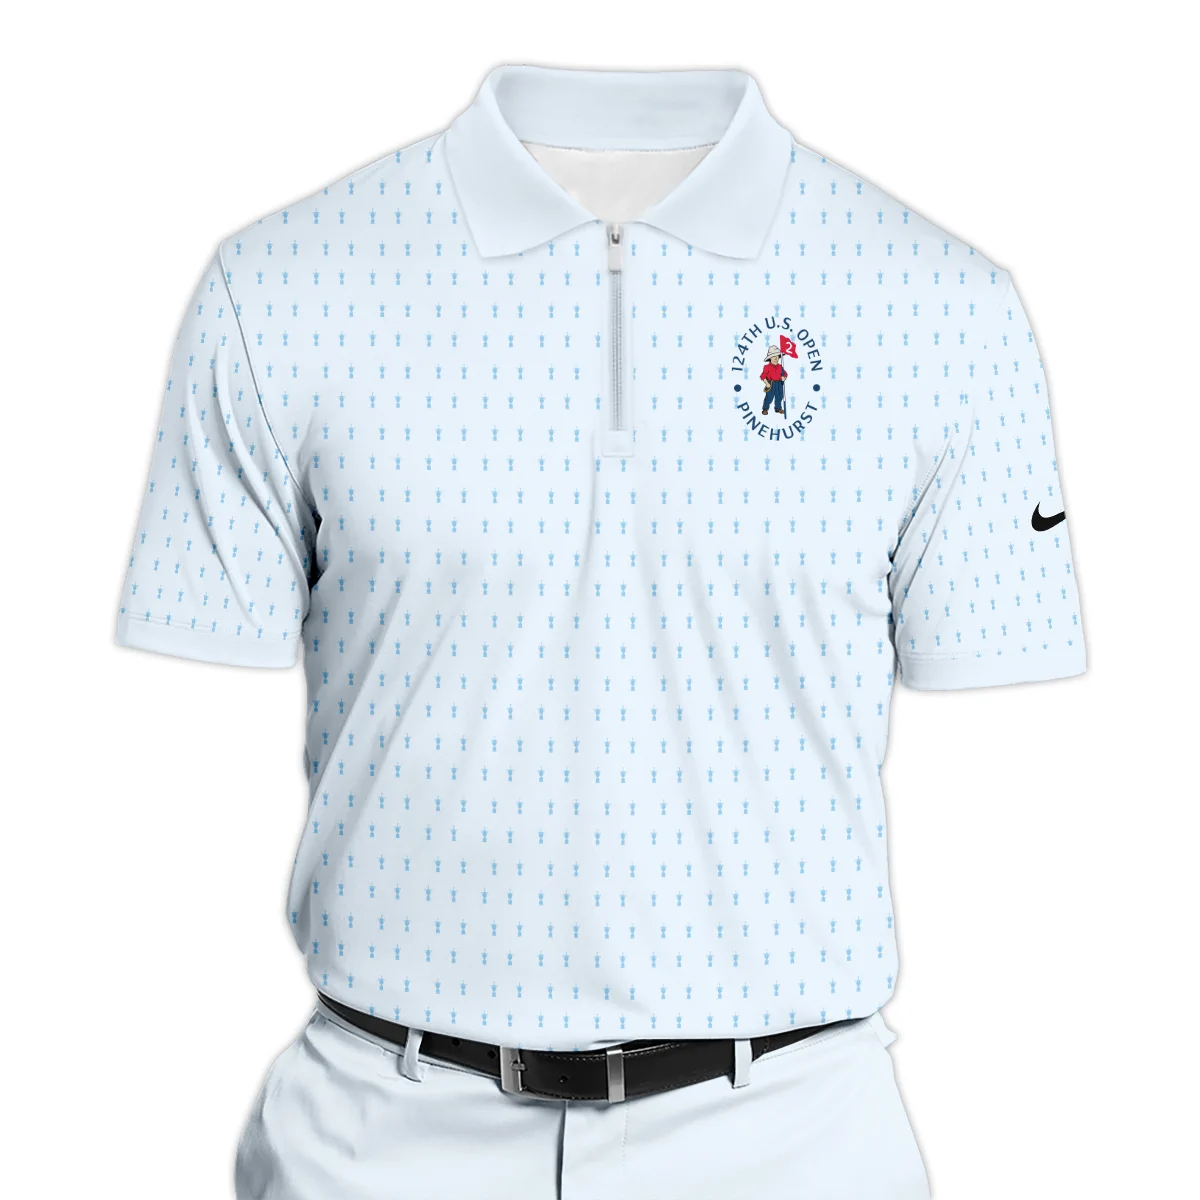 Golf Pattern Cup Light Blue Green 124th U.S. Open Pinehurst Nike Zipper Polo Shirt Style Classic Zipper Polo Shirt For Men